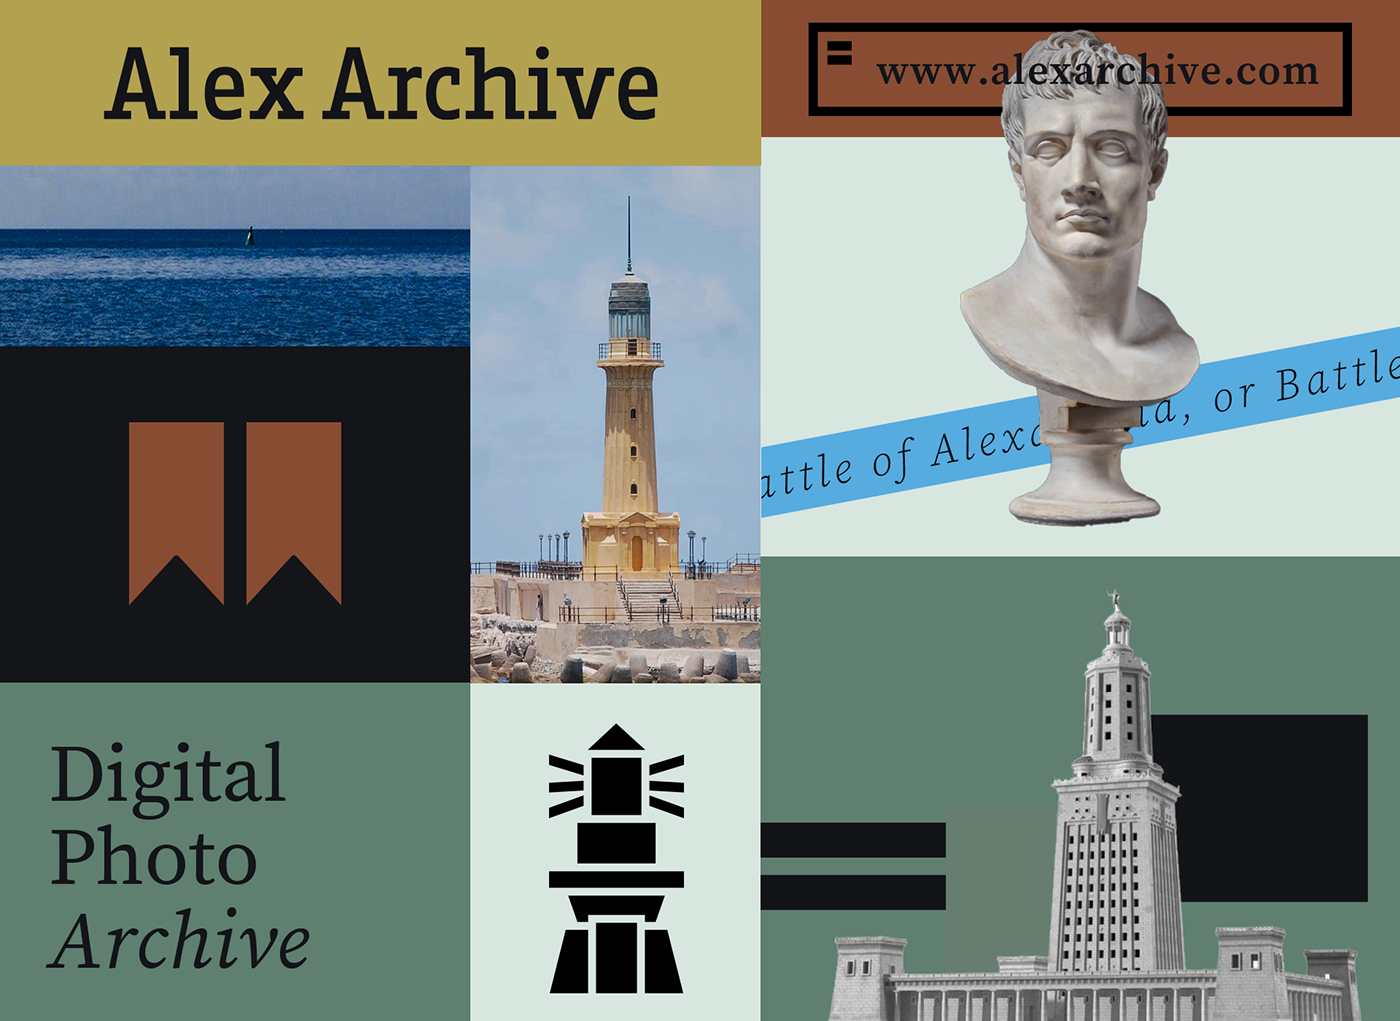 alex archive alexandria Archive brand identity branding  Encyclopedia logo visual identity